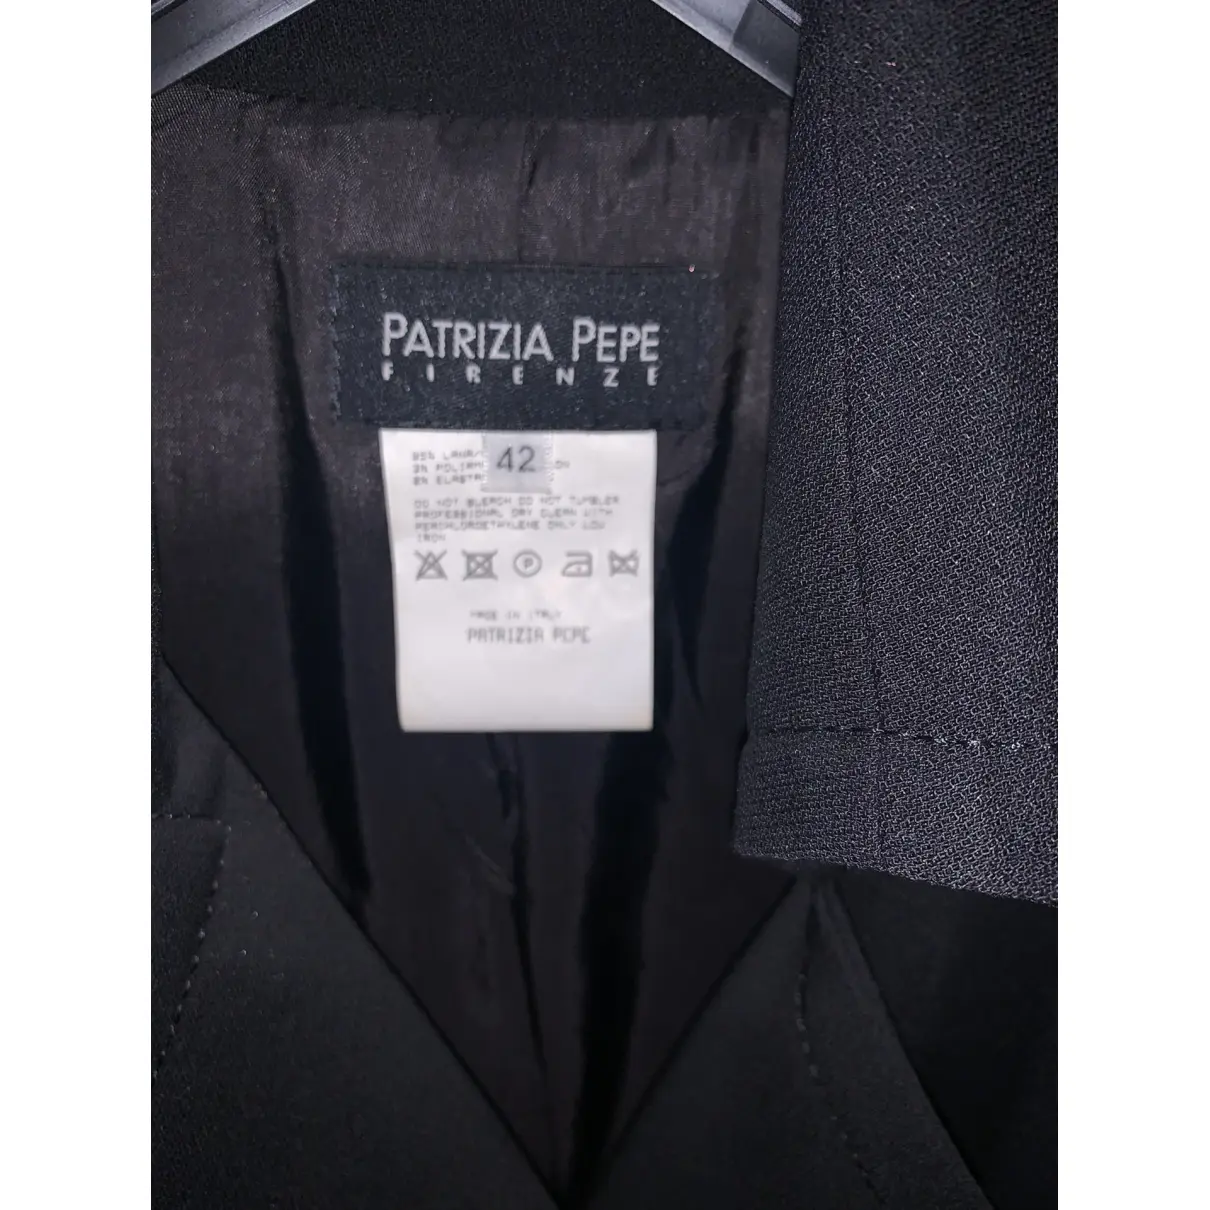 Buy Patrizia Pepe Wool suit jacket online